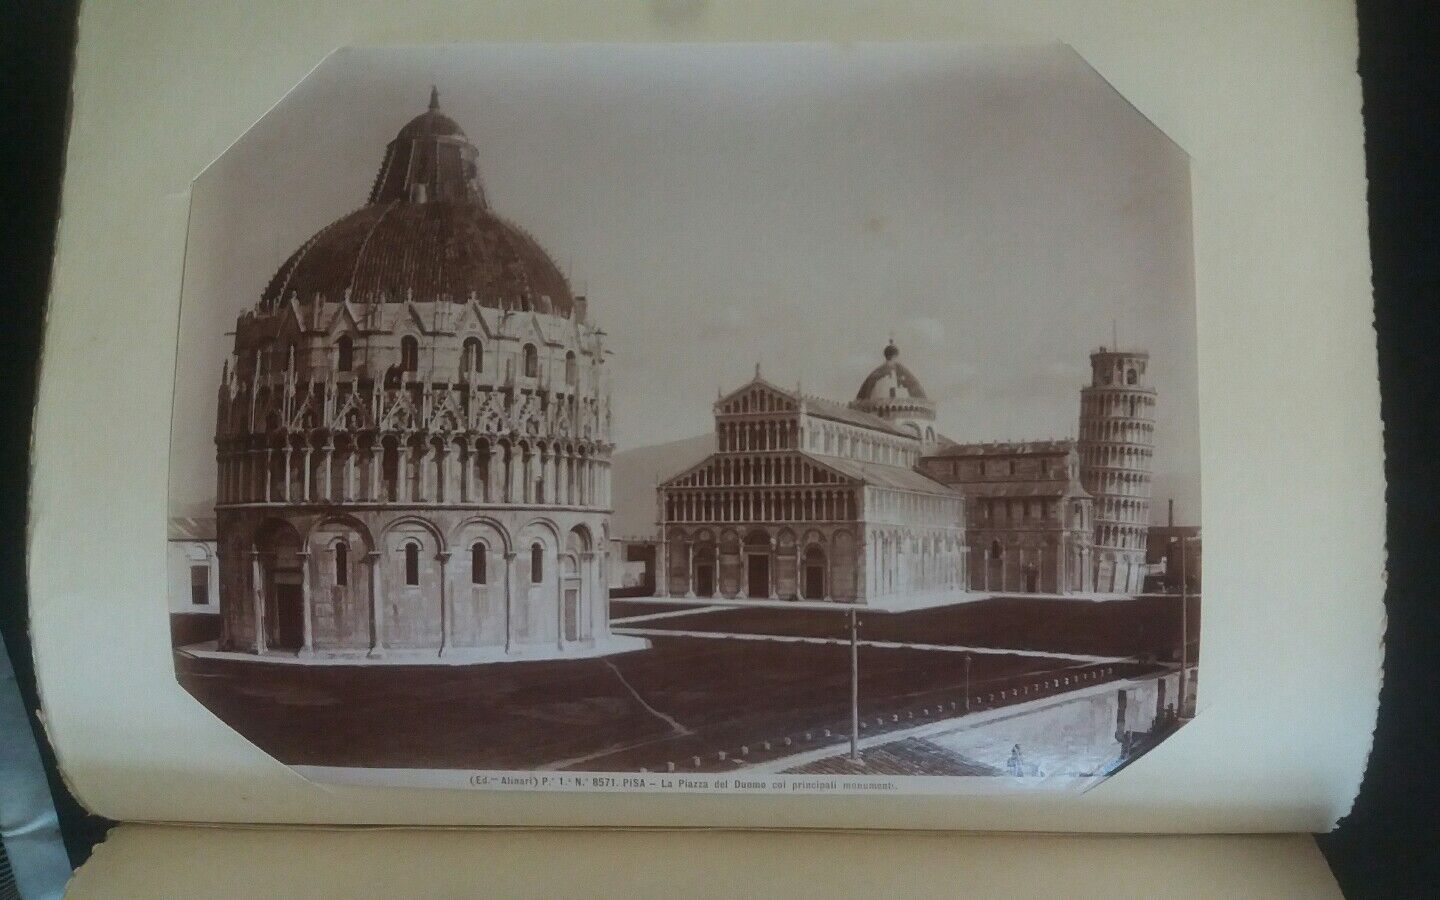 60 GRANDES fotografie albuminé BROGI, ALINARI, etc. ITALIA Vers 1880